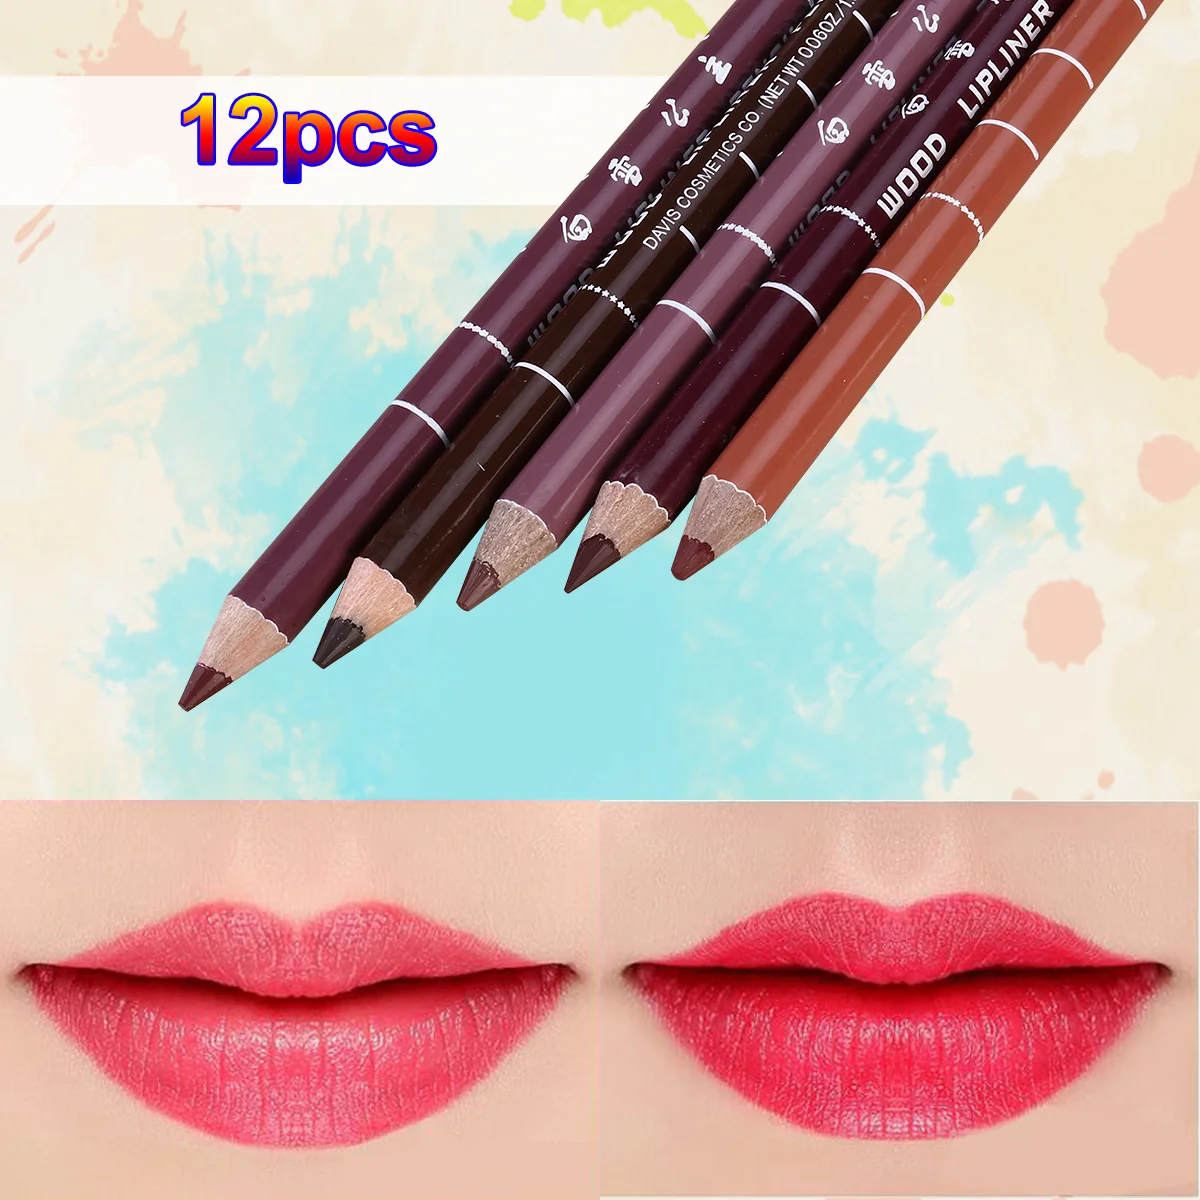 

12PCS Random Color Smooth Professional Easy to Apply Waterproof Lipliner Lip Makeup Set for Ladies Girls Women